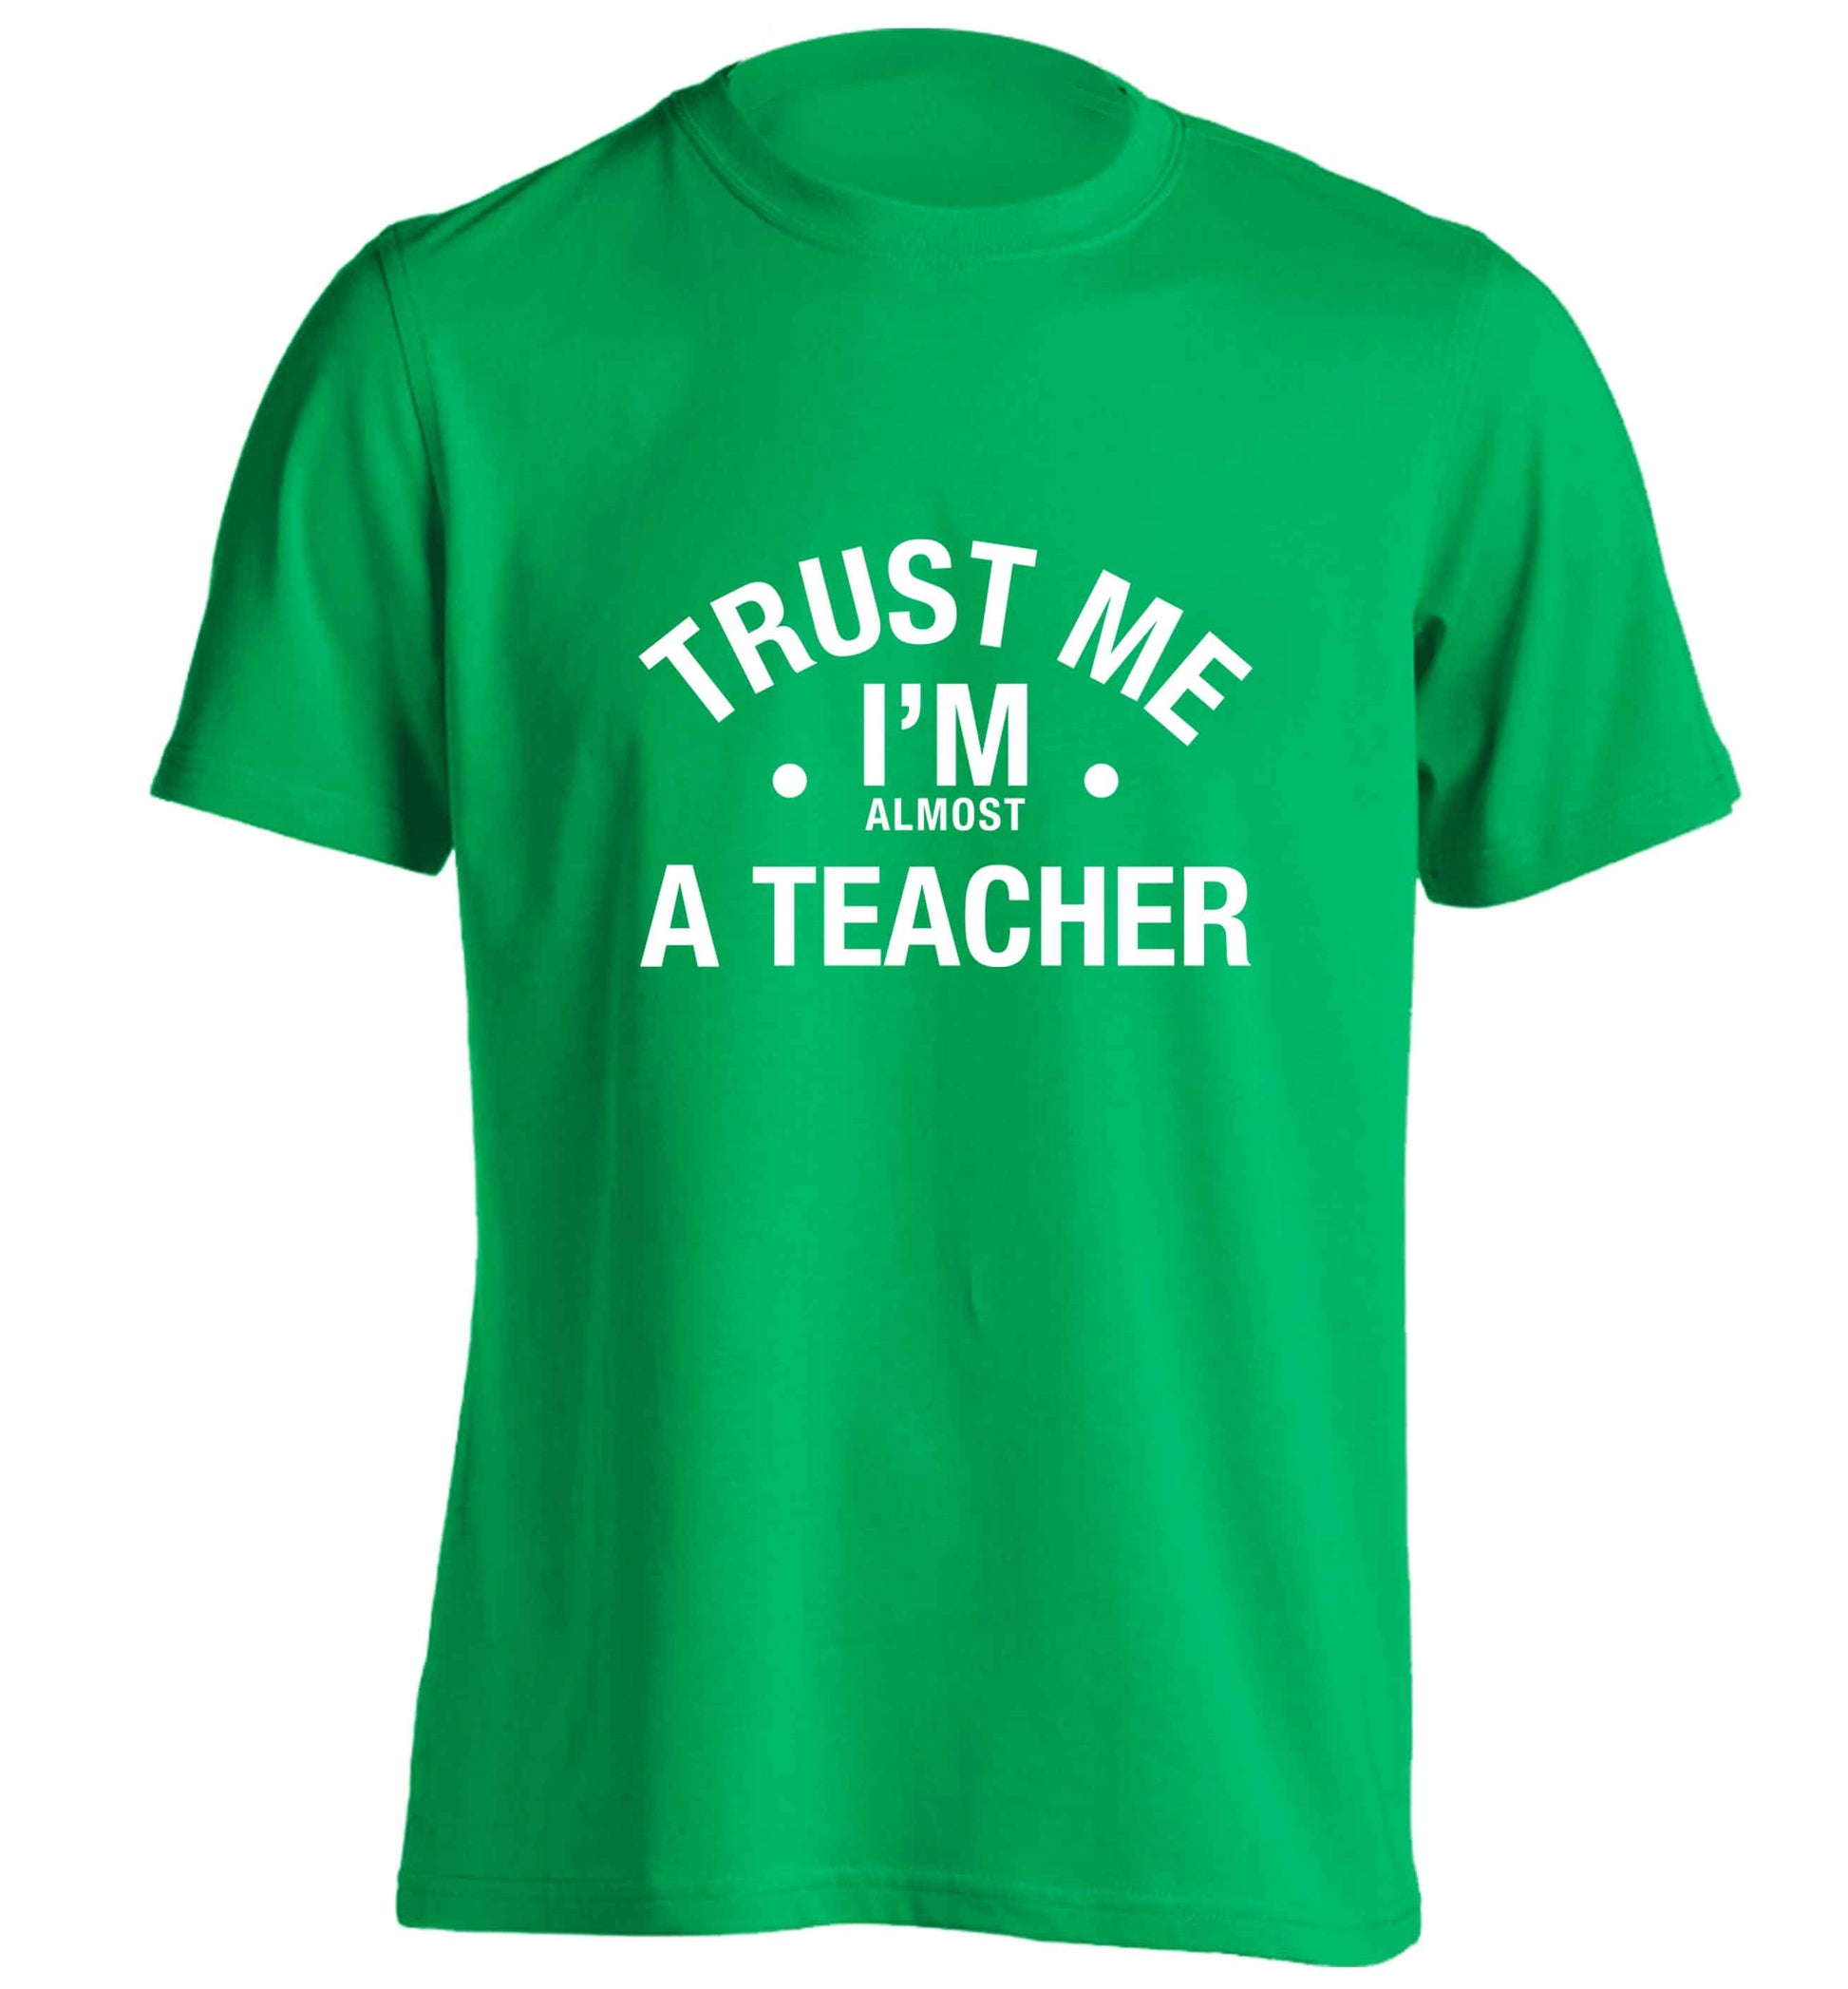 Trust me I'm almost a teacher adults unisex green Tshirt 2XL